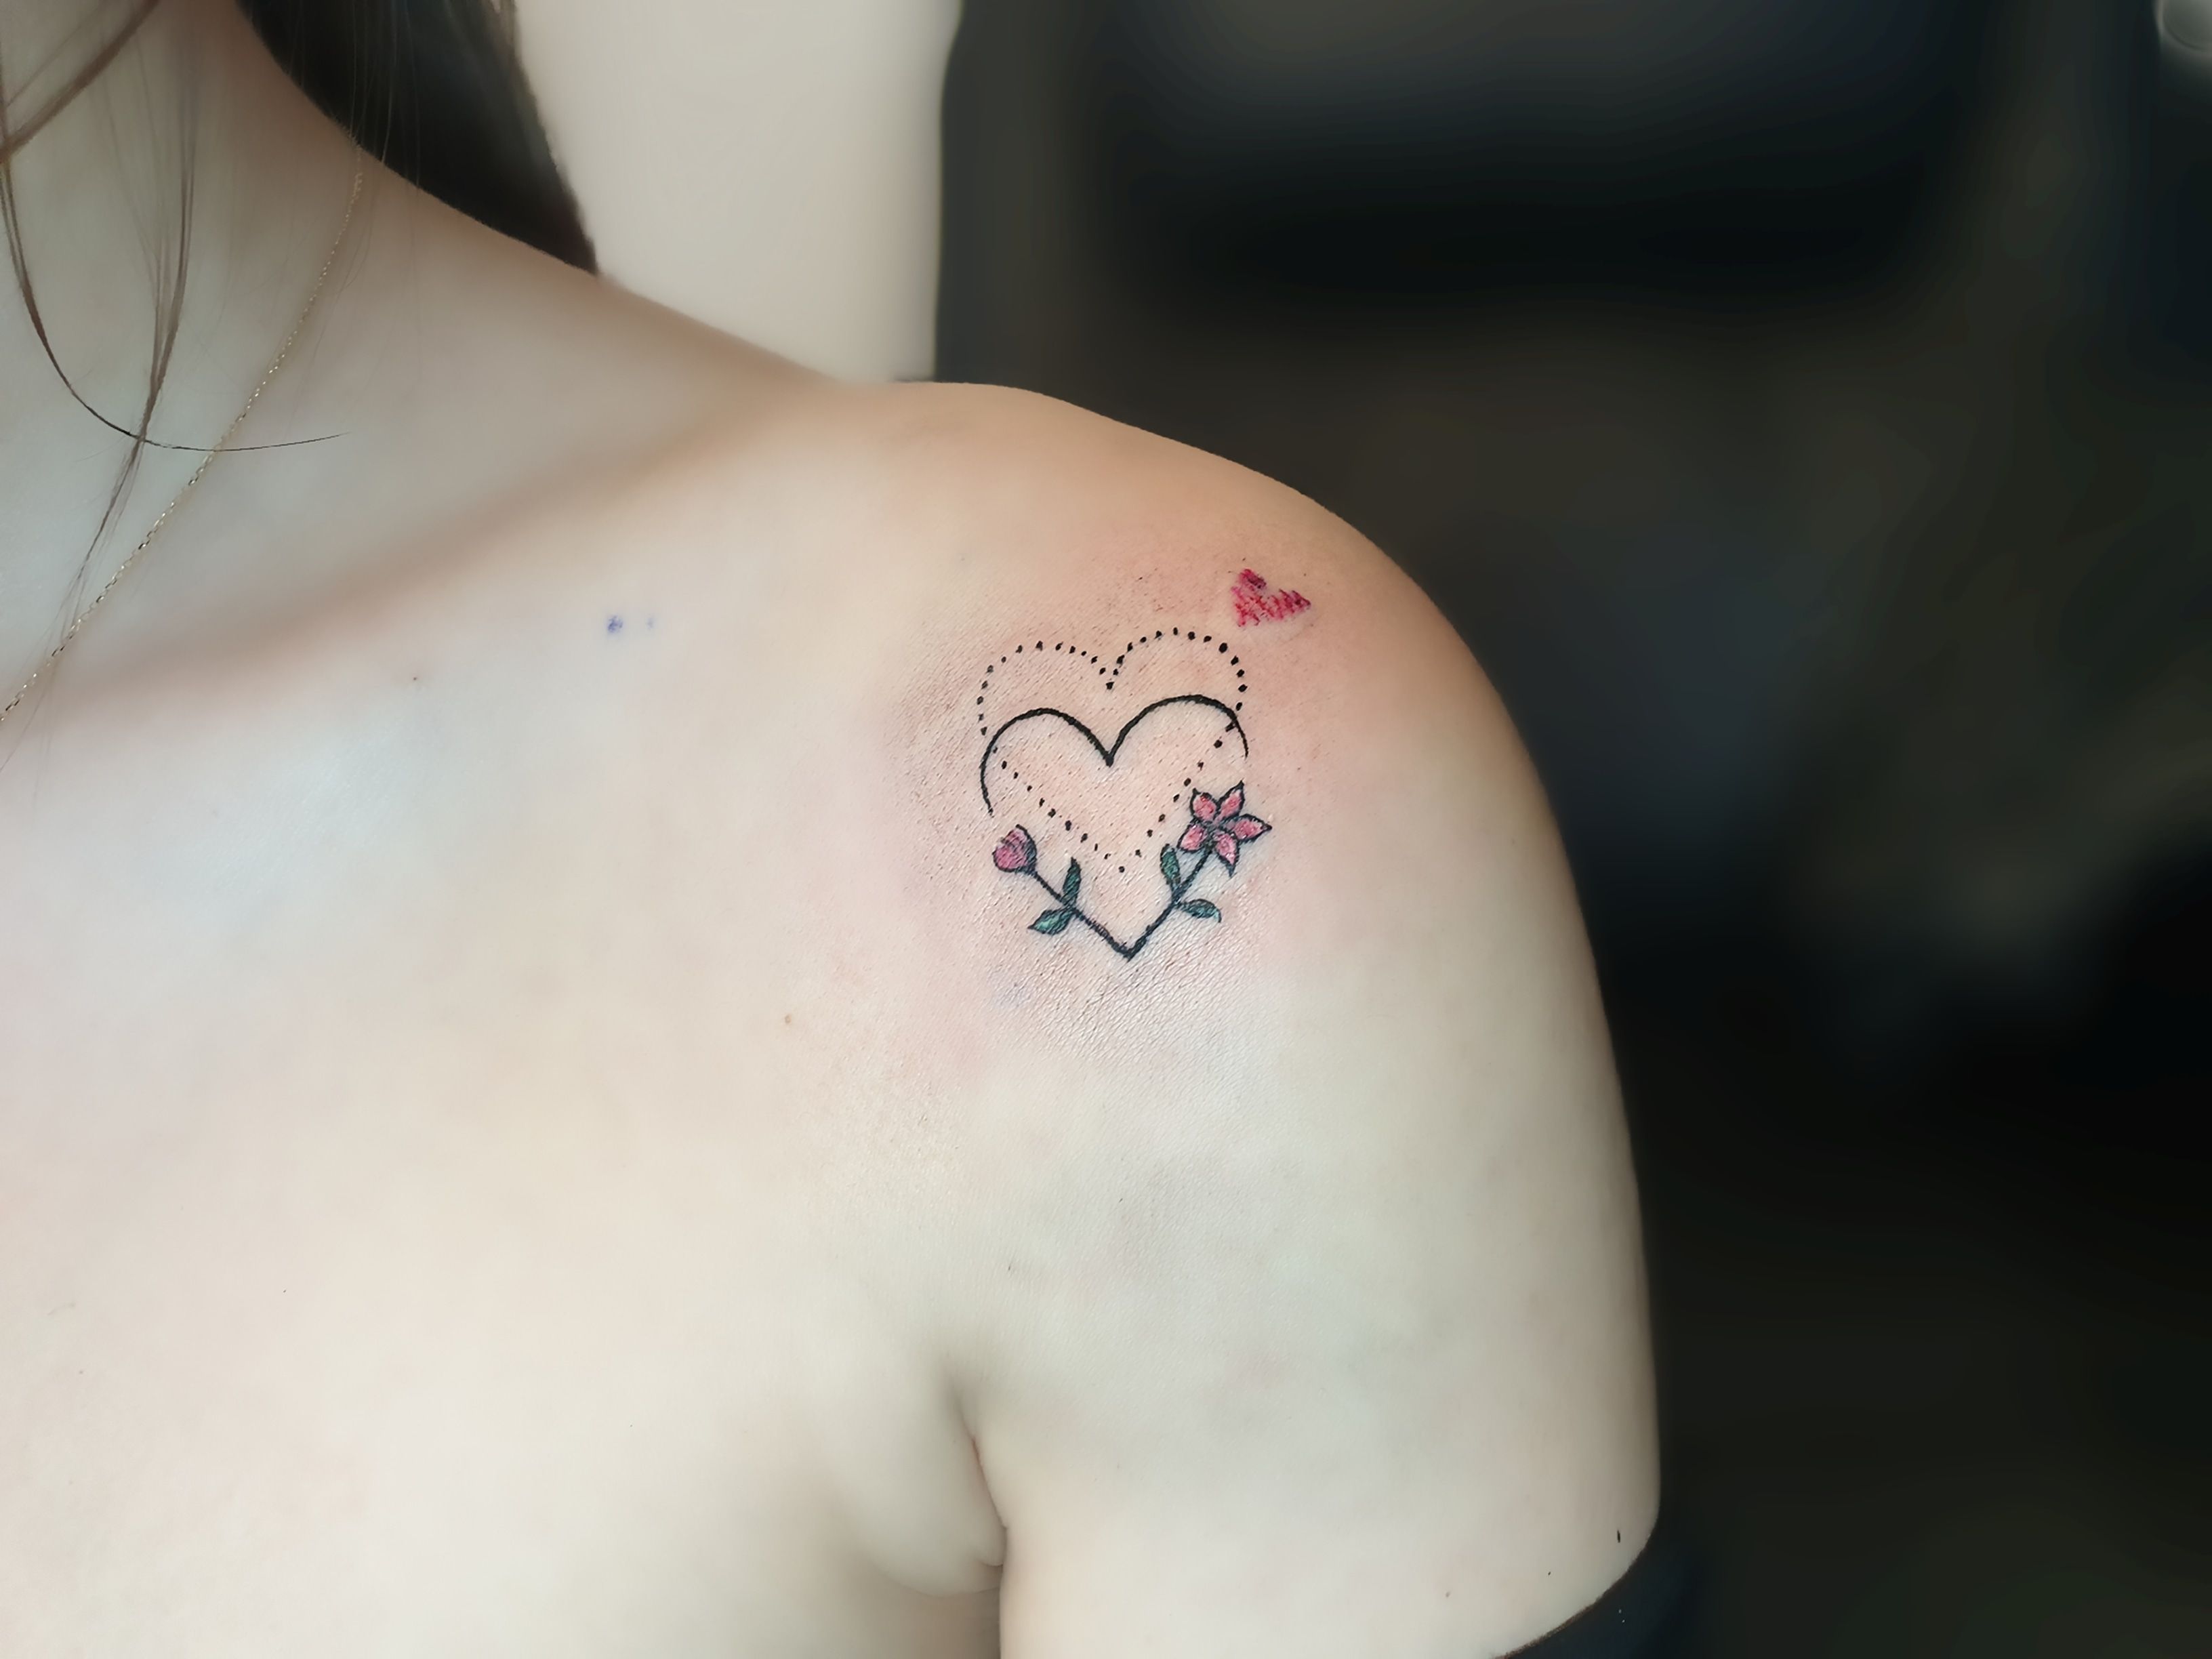 Heart Tattoos: The Ultimate Symbol of Love - Glaminati